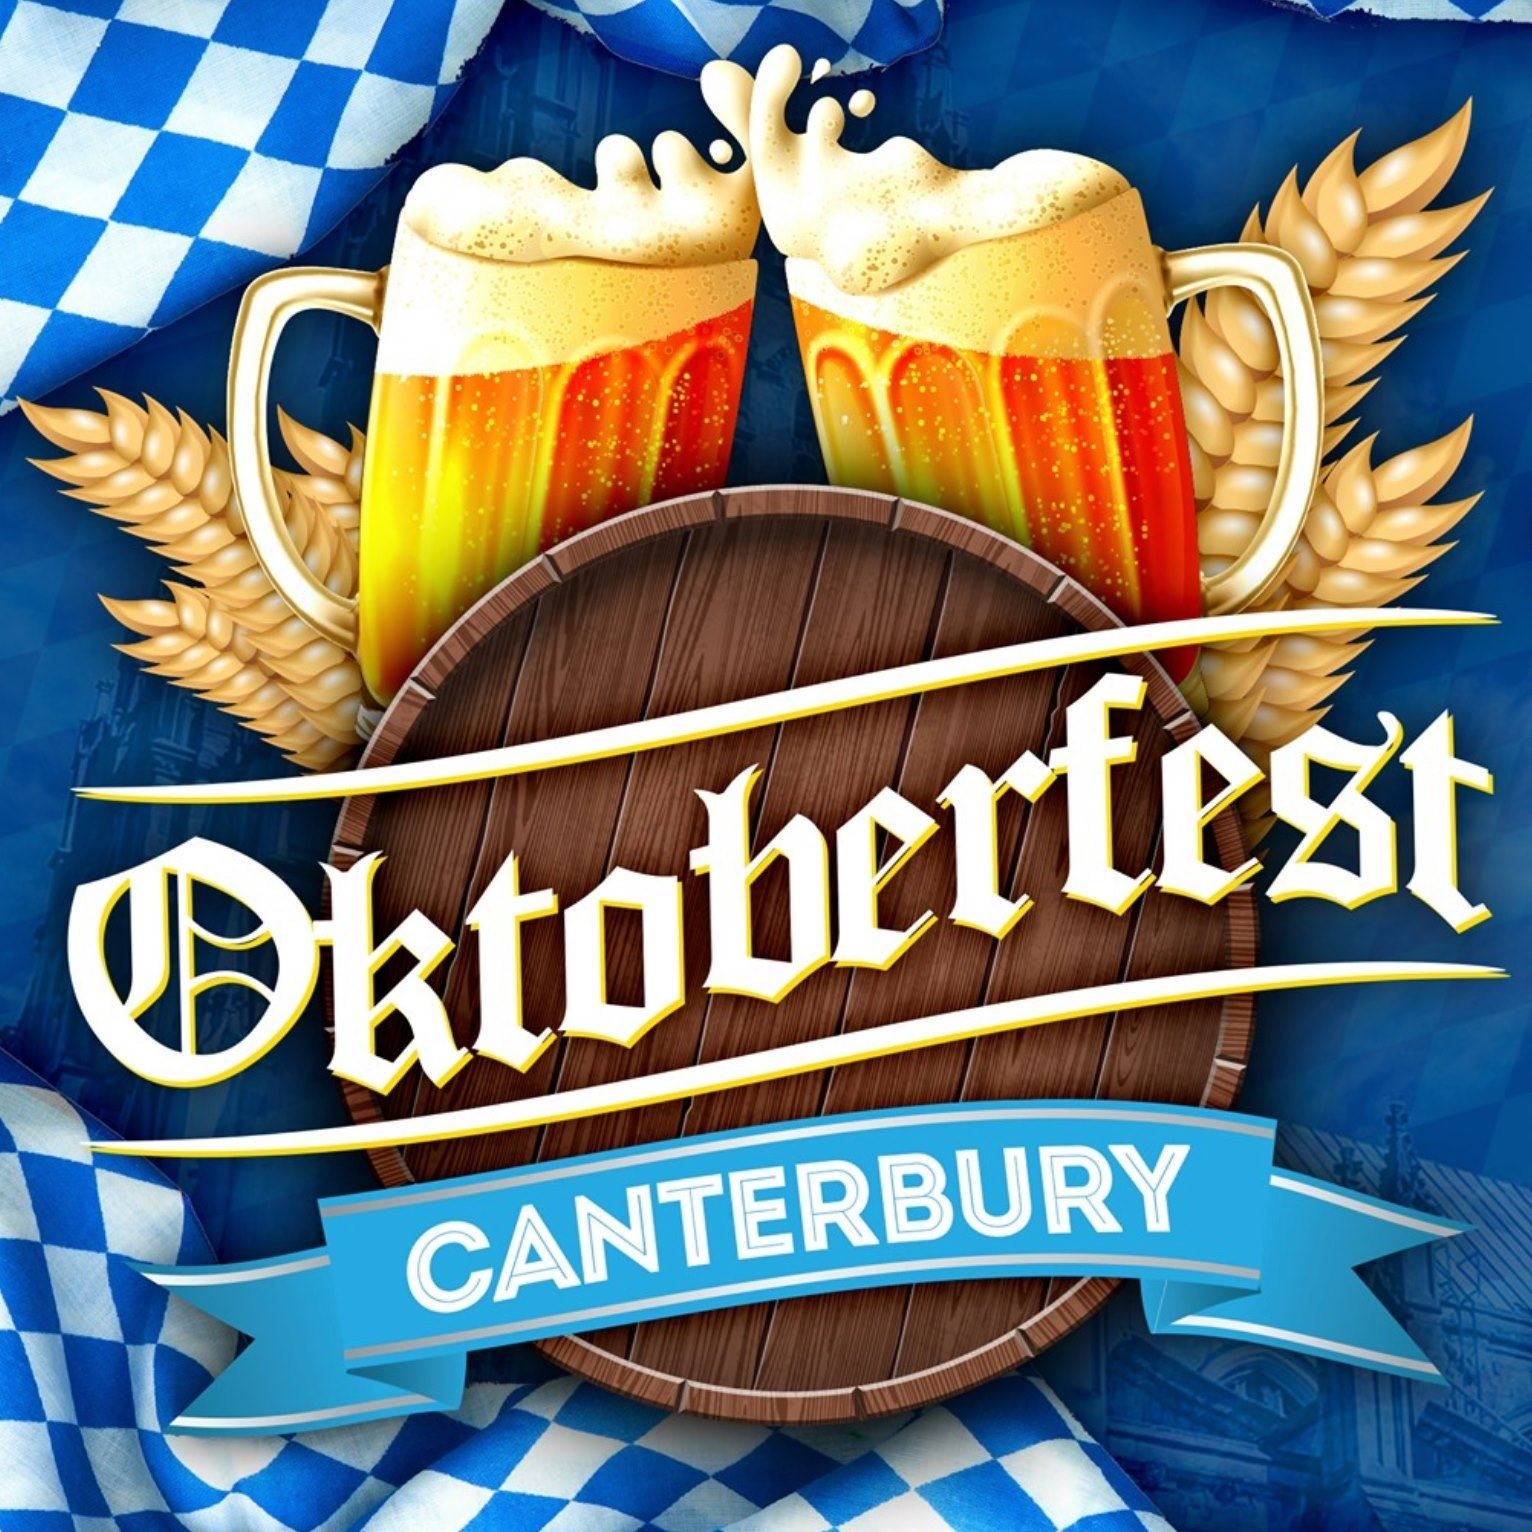 A poster promoting Canterbury Oktoberfest